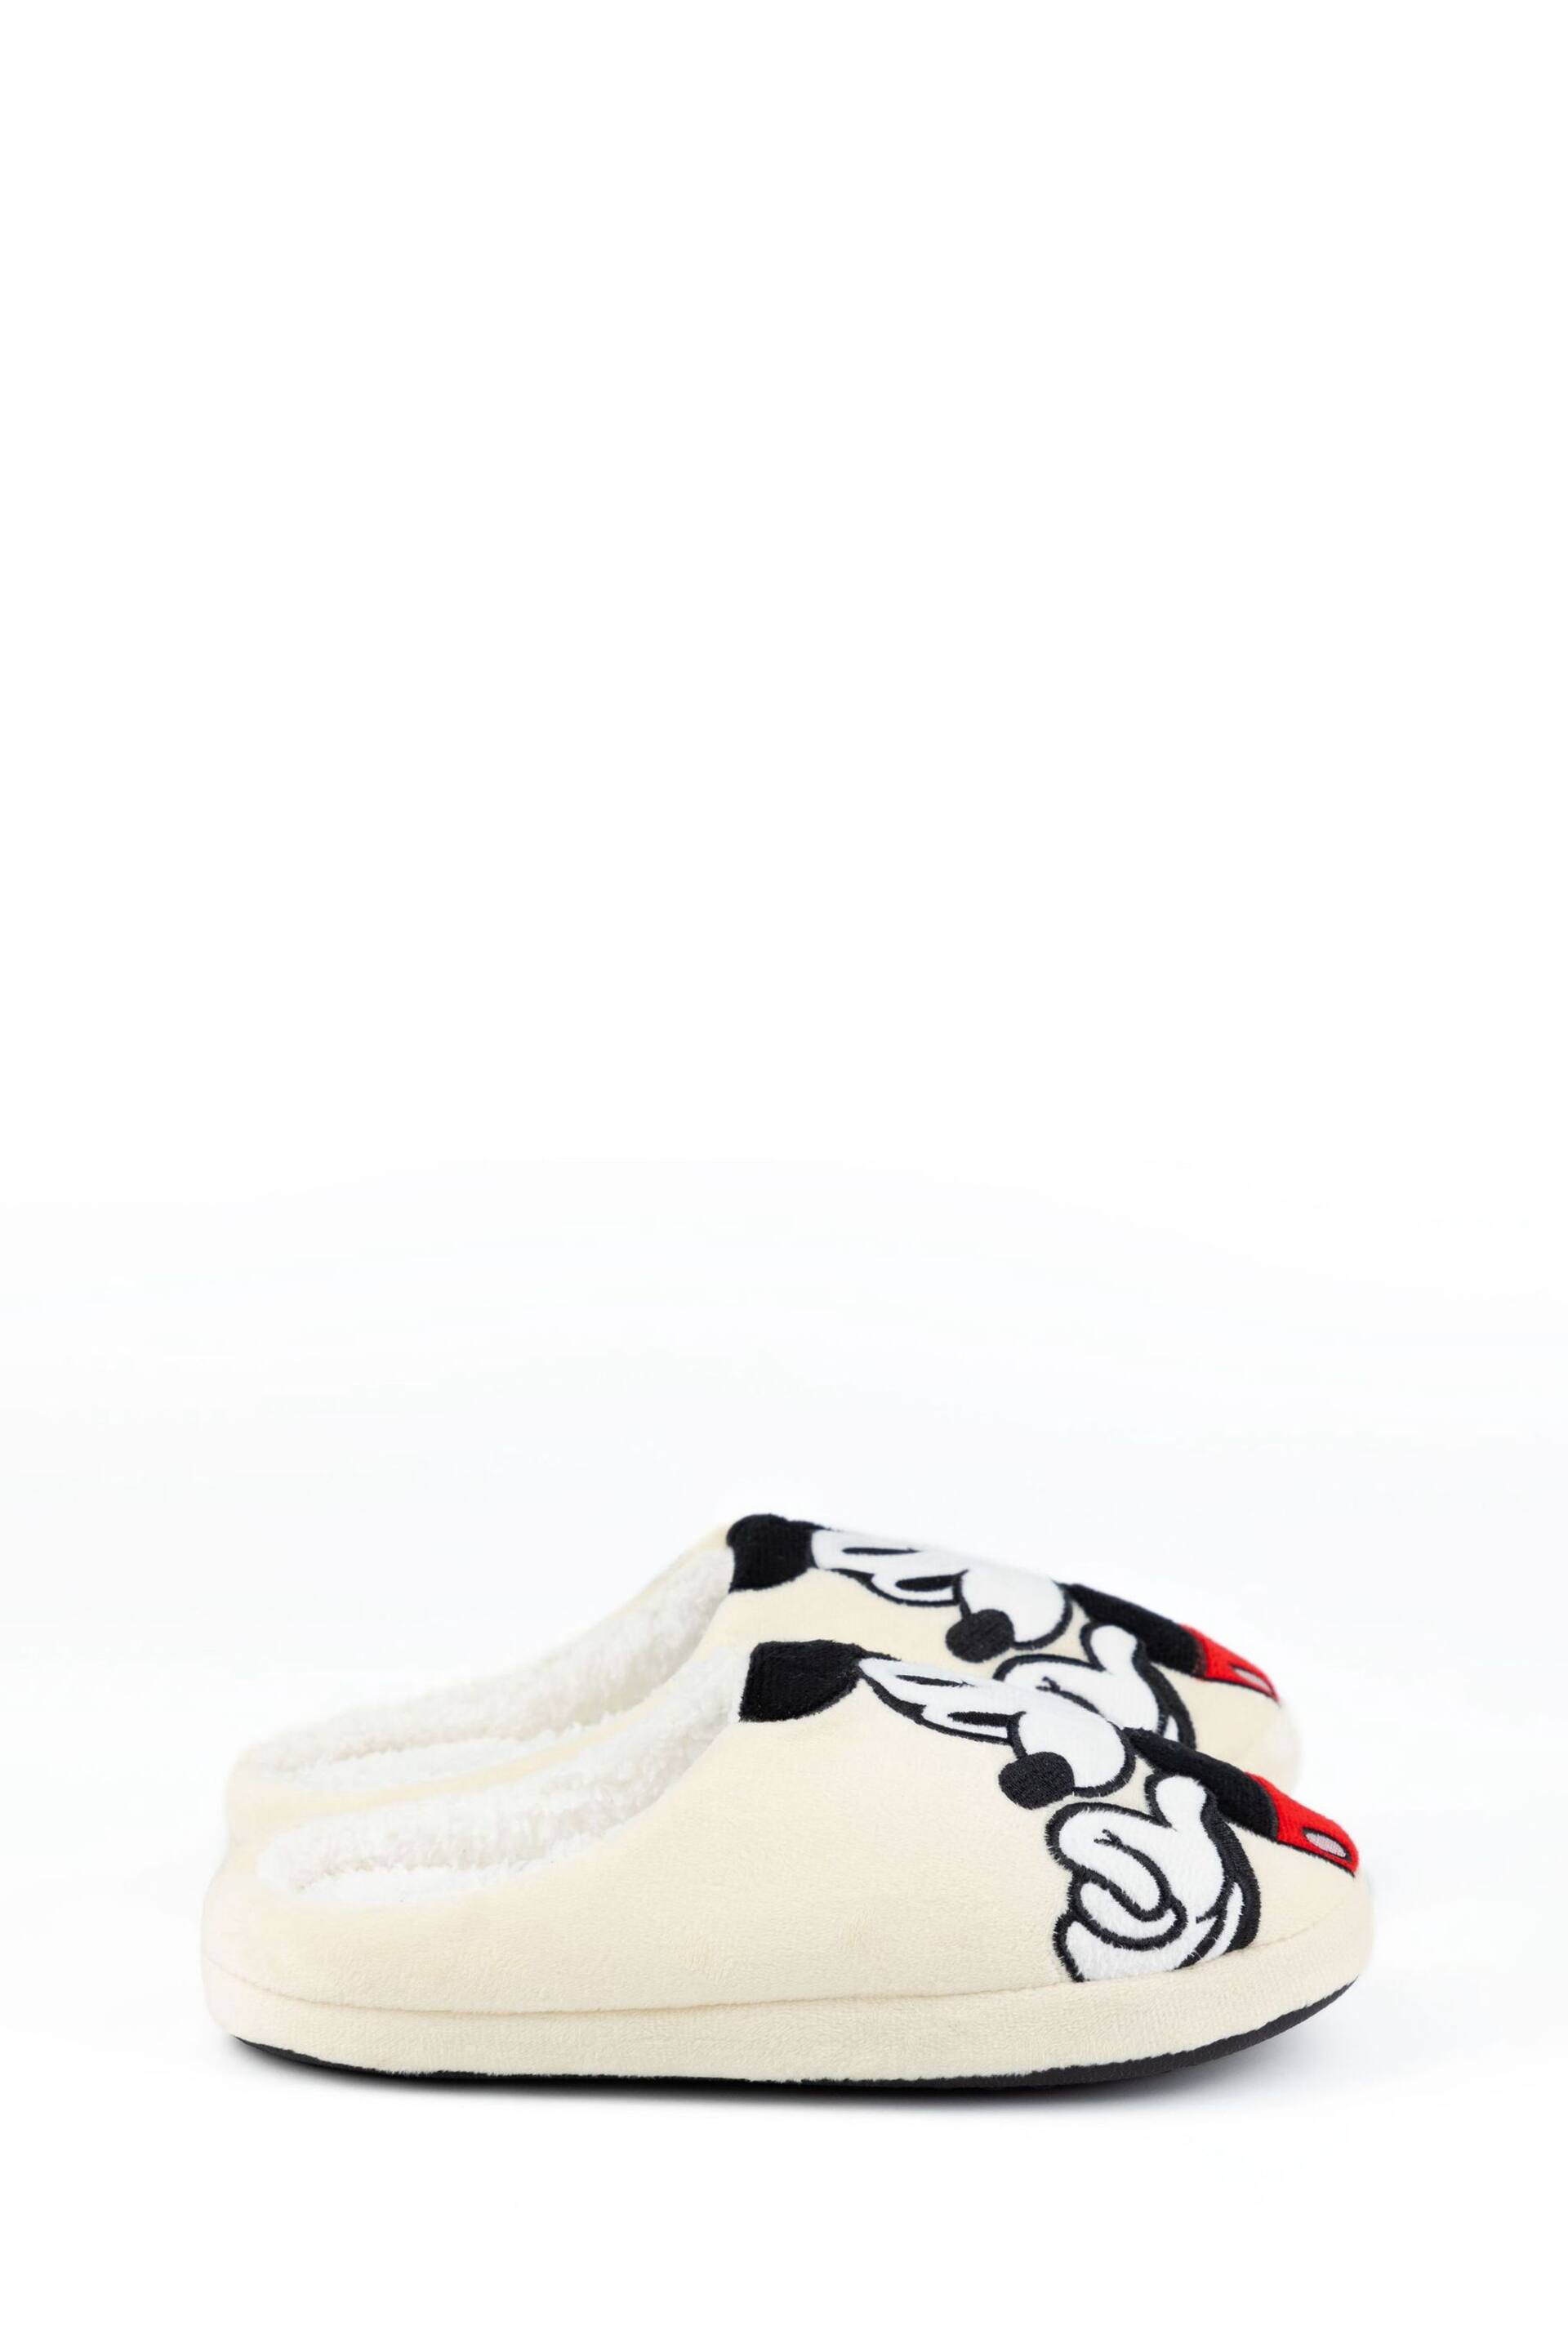 Vanilla Underground Cream Mickey Mouse Womens Mule Slippers - Image 2 of 6